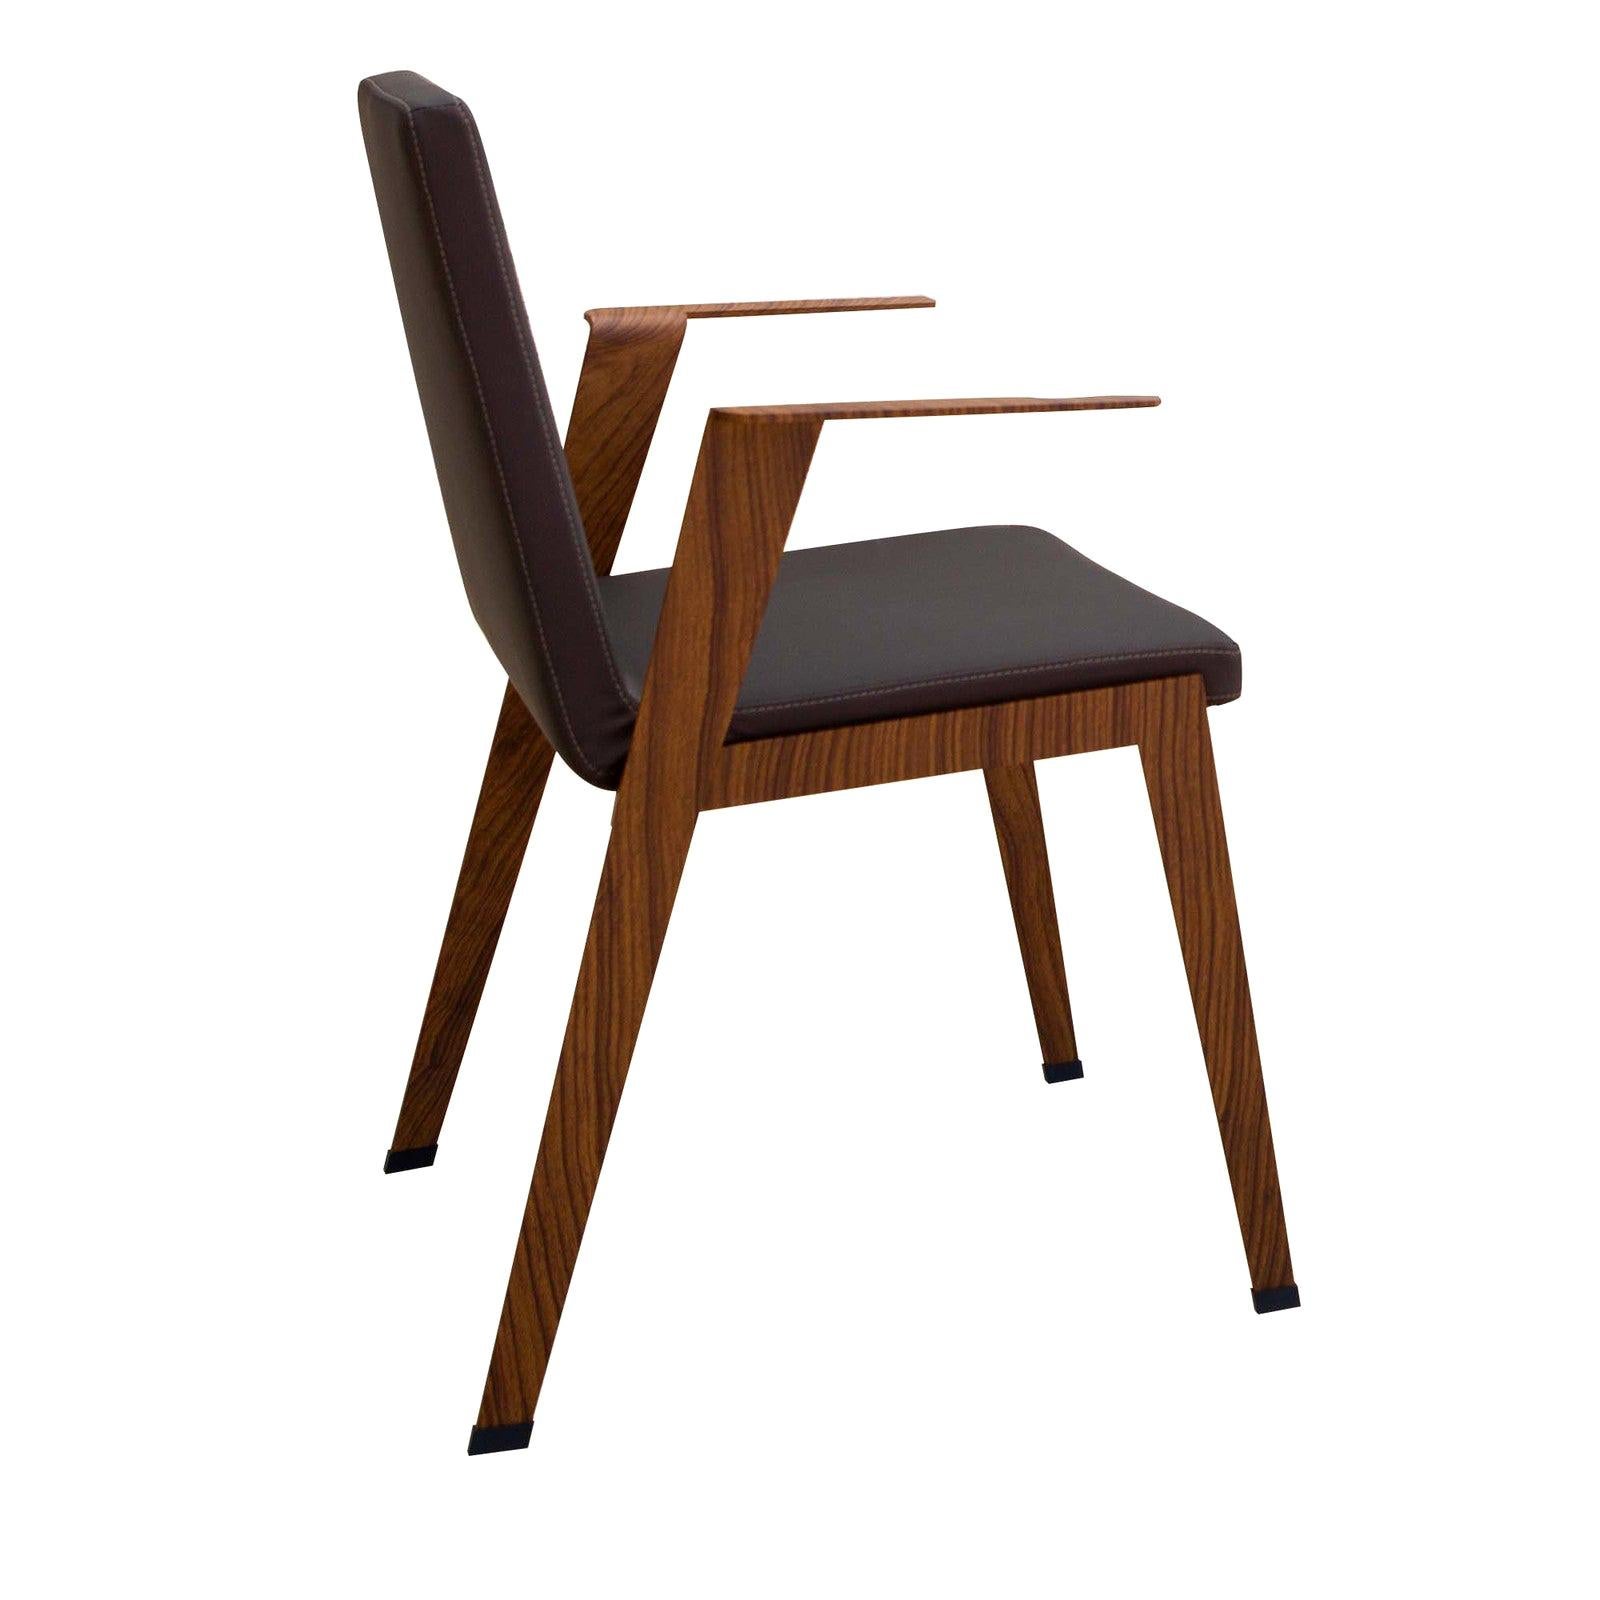 Bellagio Chair